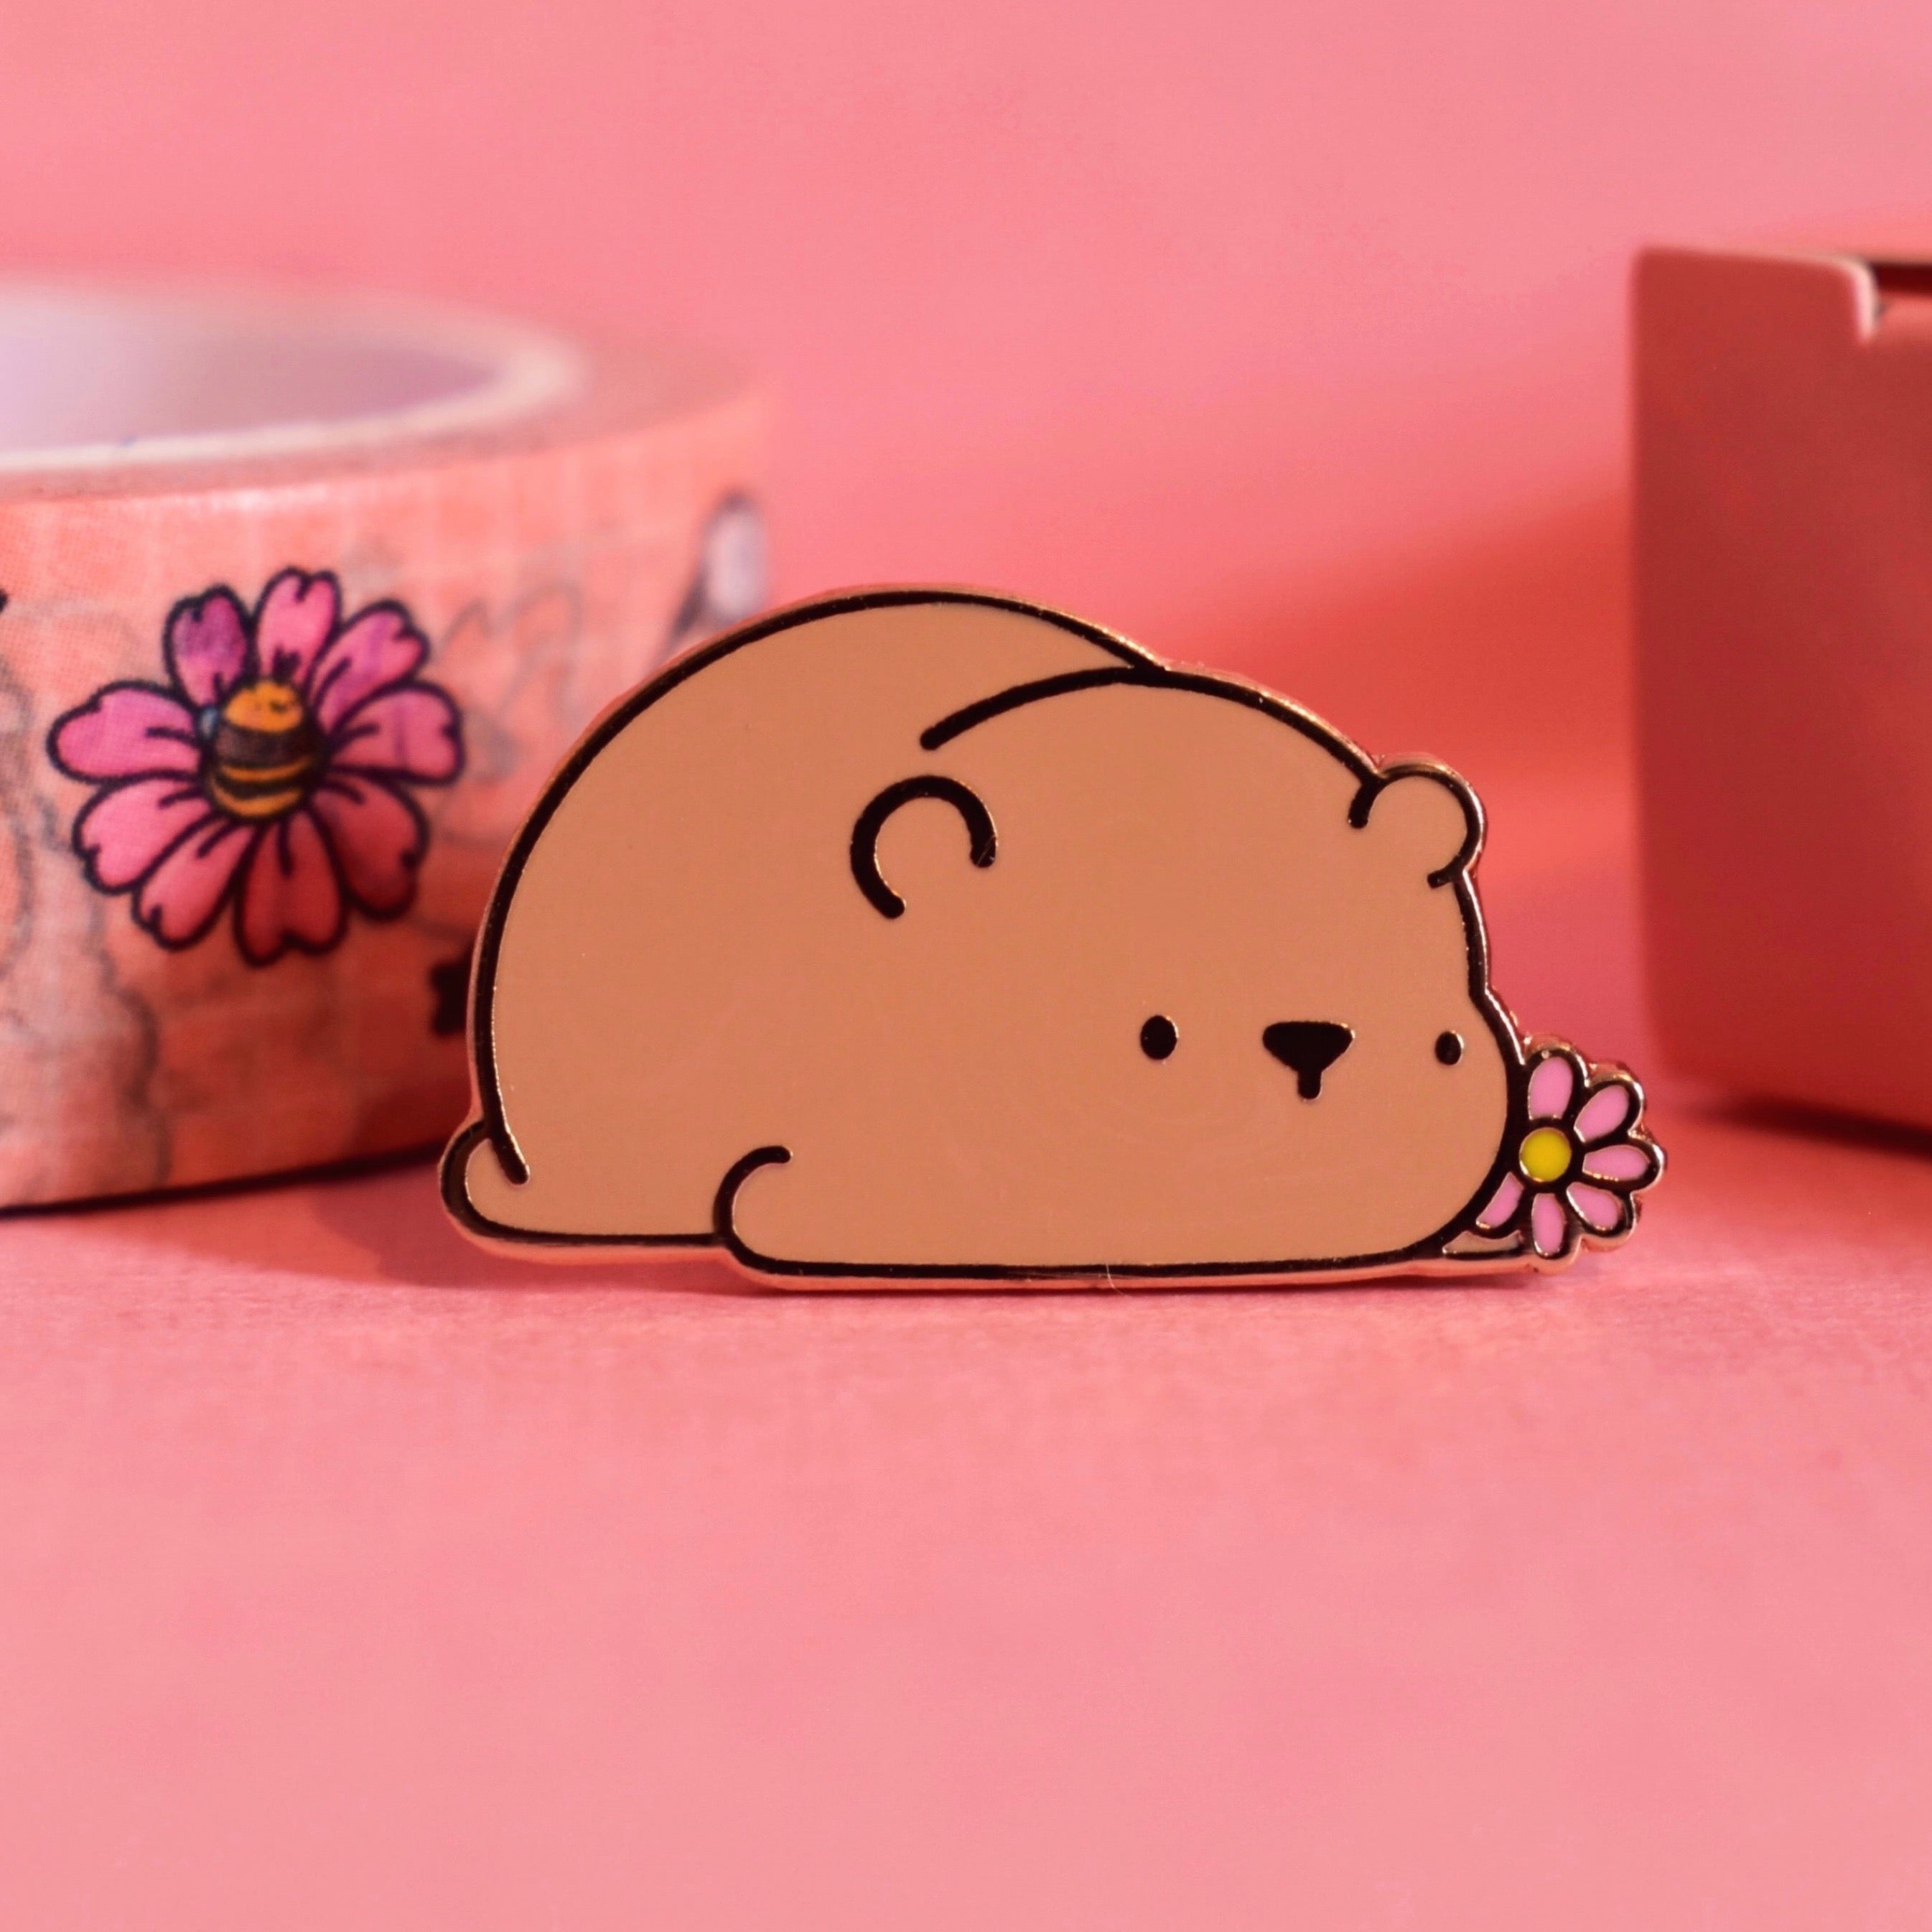 Cute bear enamel pin sat on a pink background